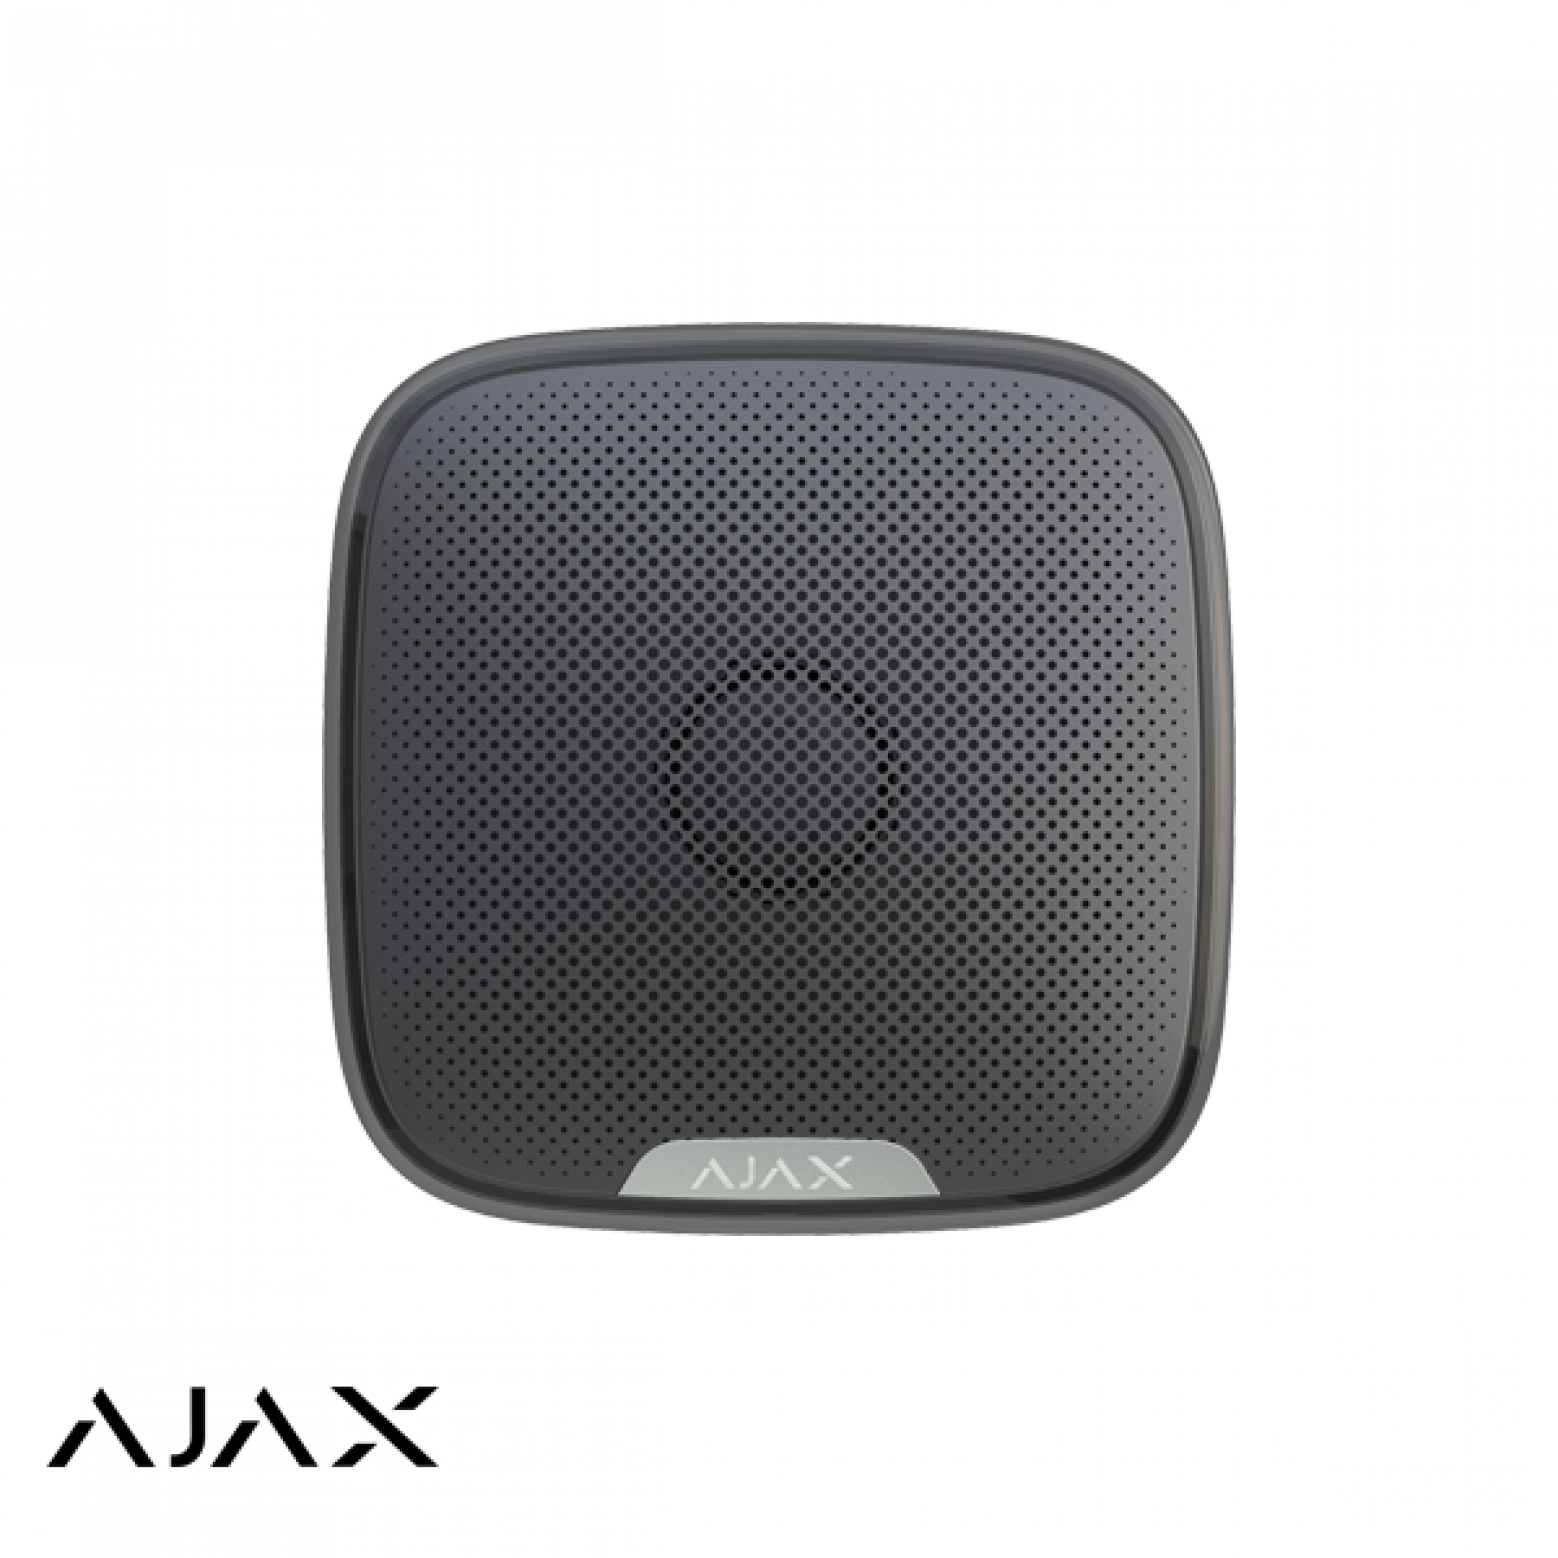 Ajax StreetSiren outdoor siren wireless